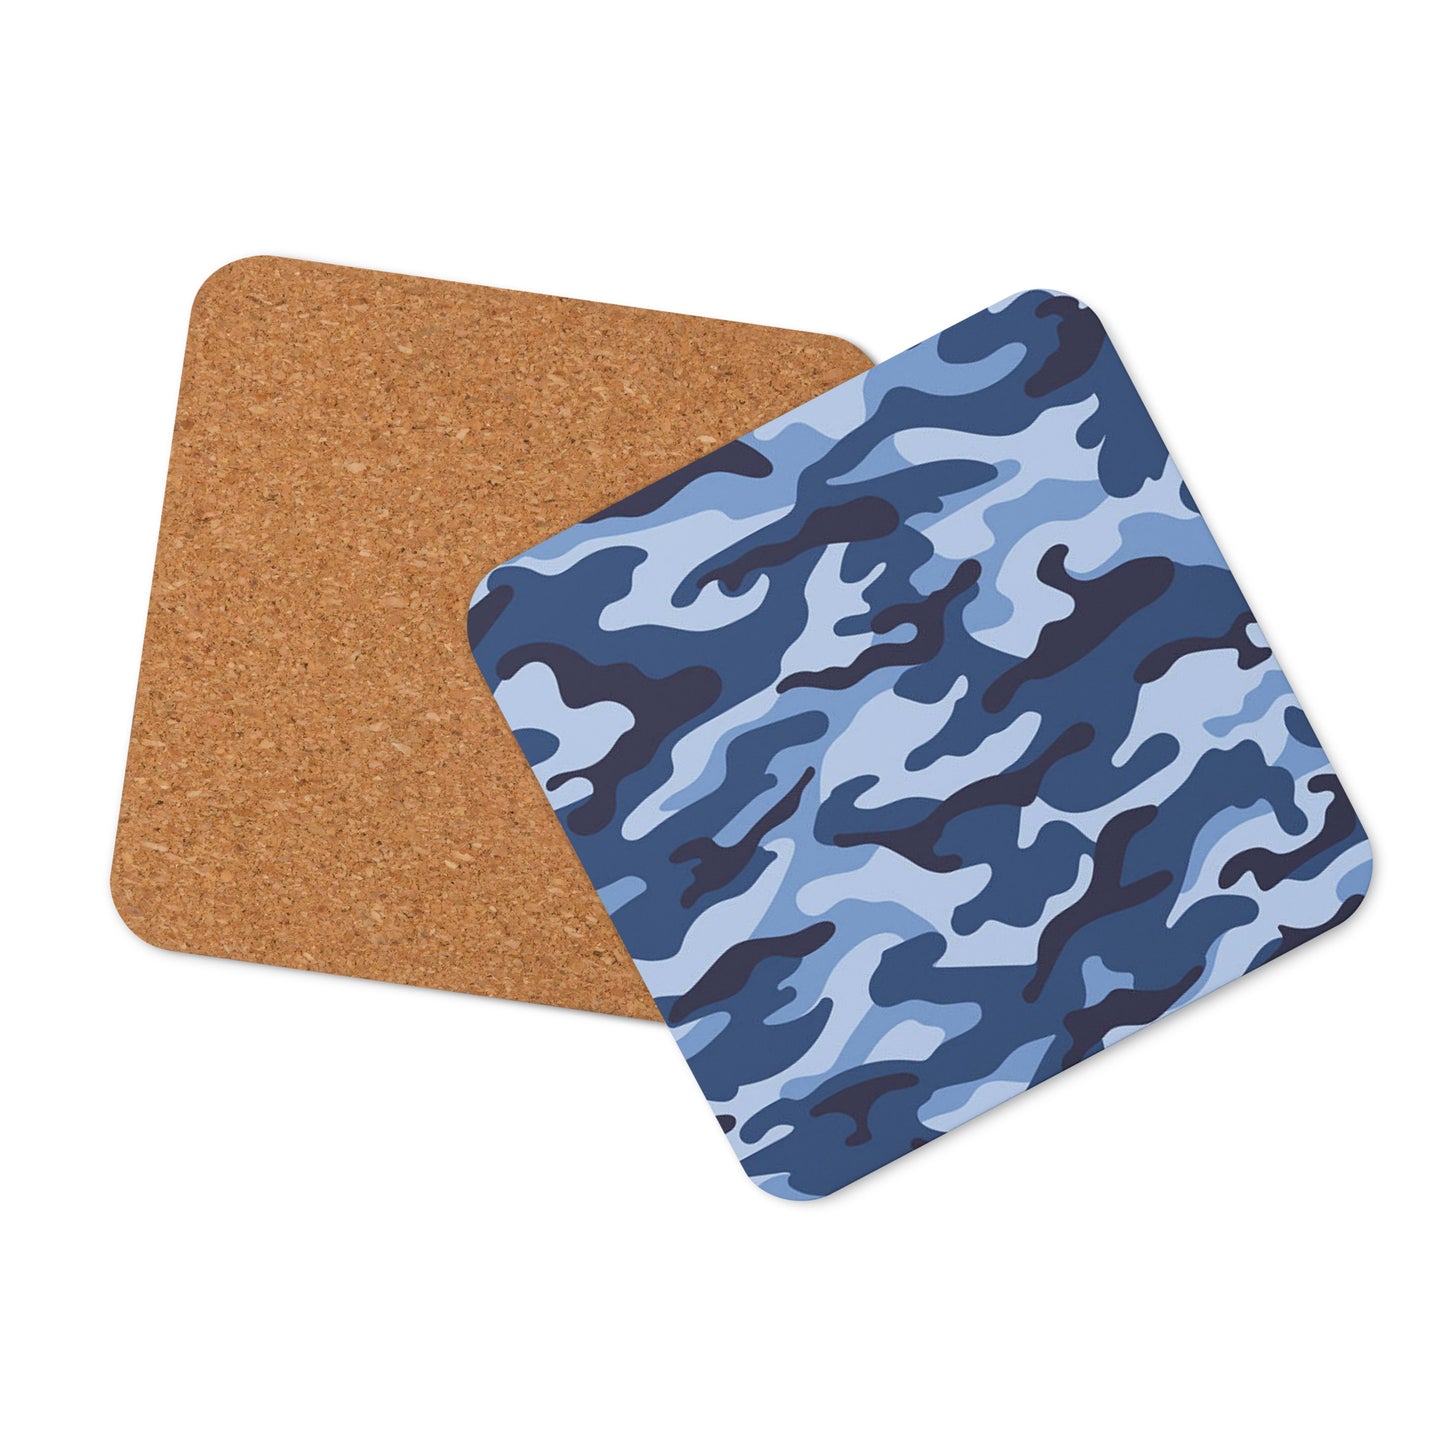 Cork-back coaster - Blue Camouflage